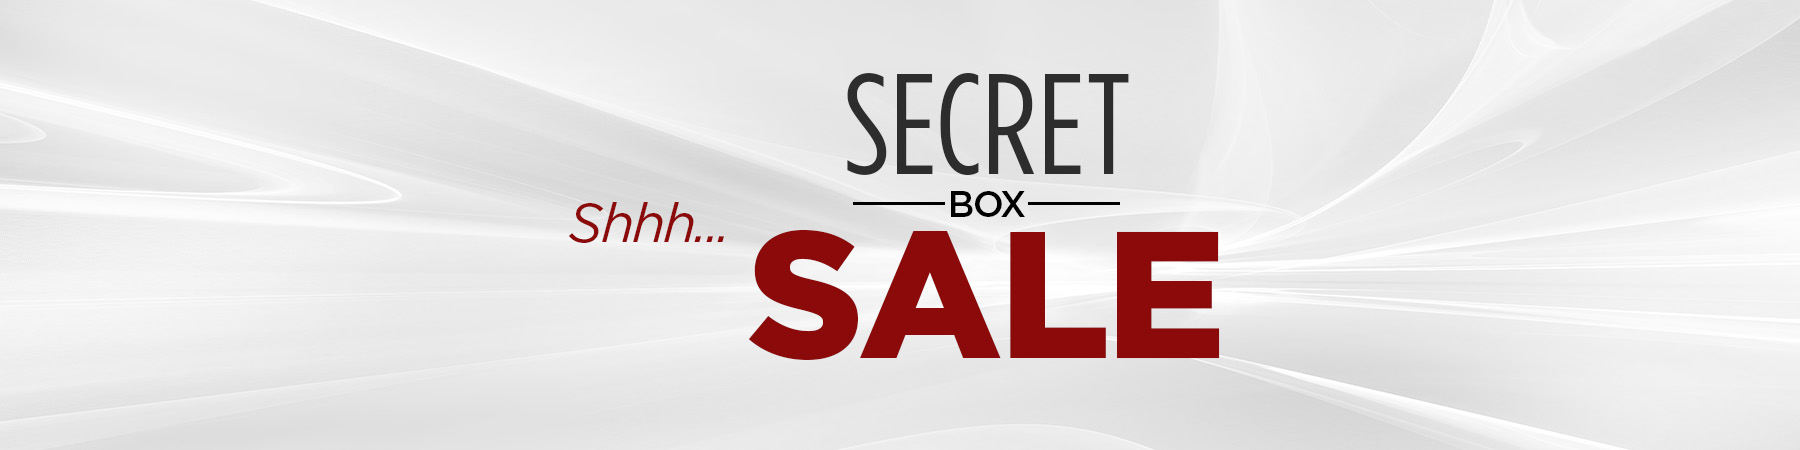 Shhh.. Secret Box Sale